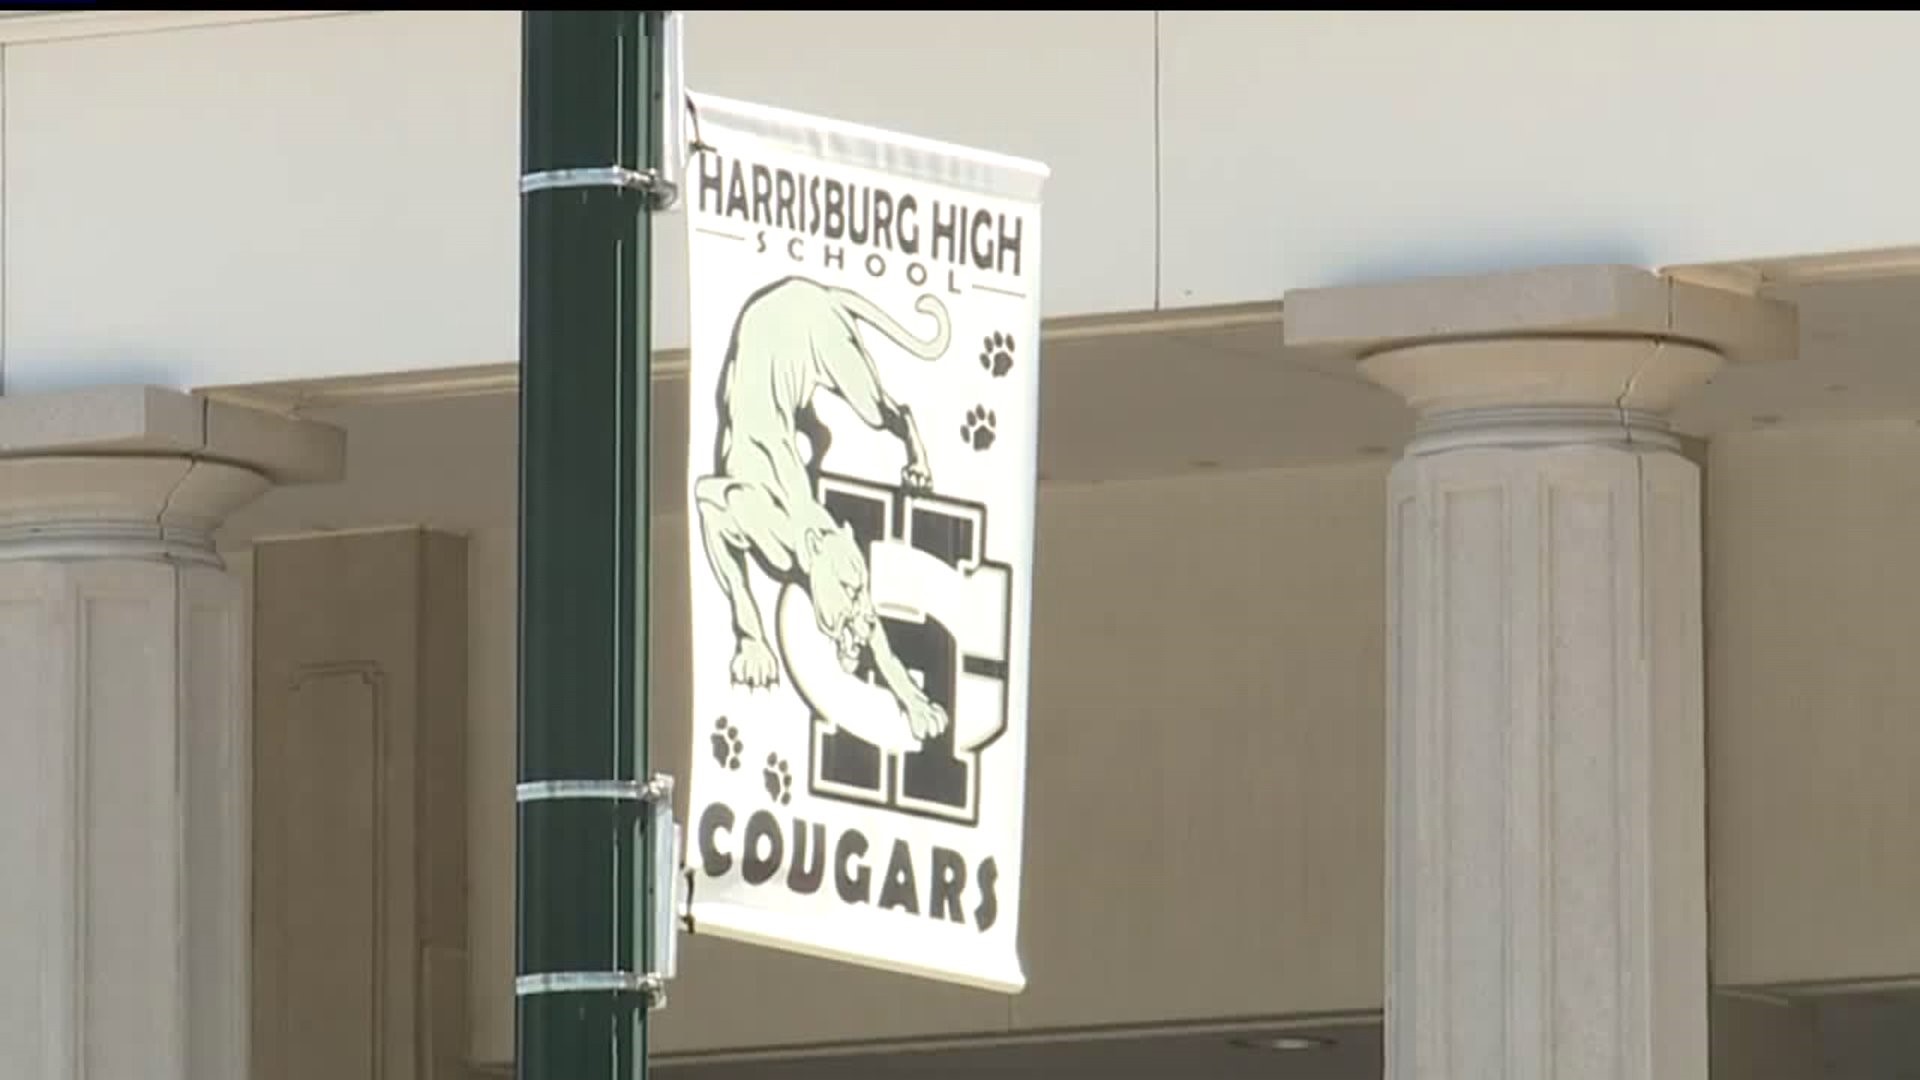 School officials address mass suspensions in Harrisburg